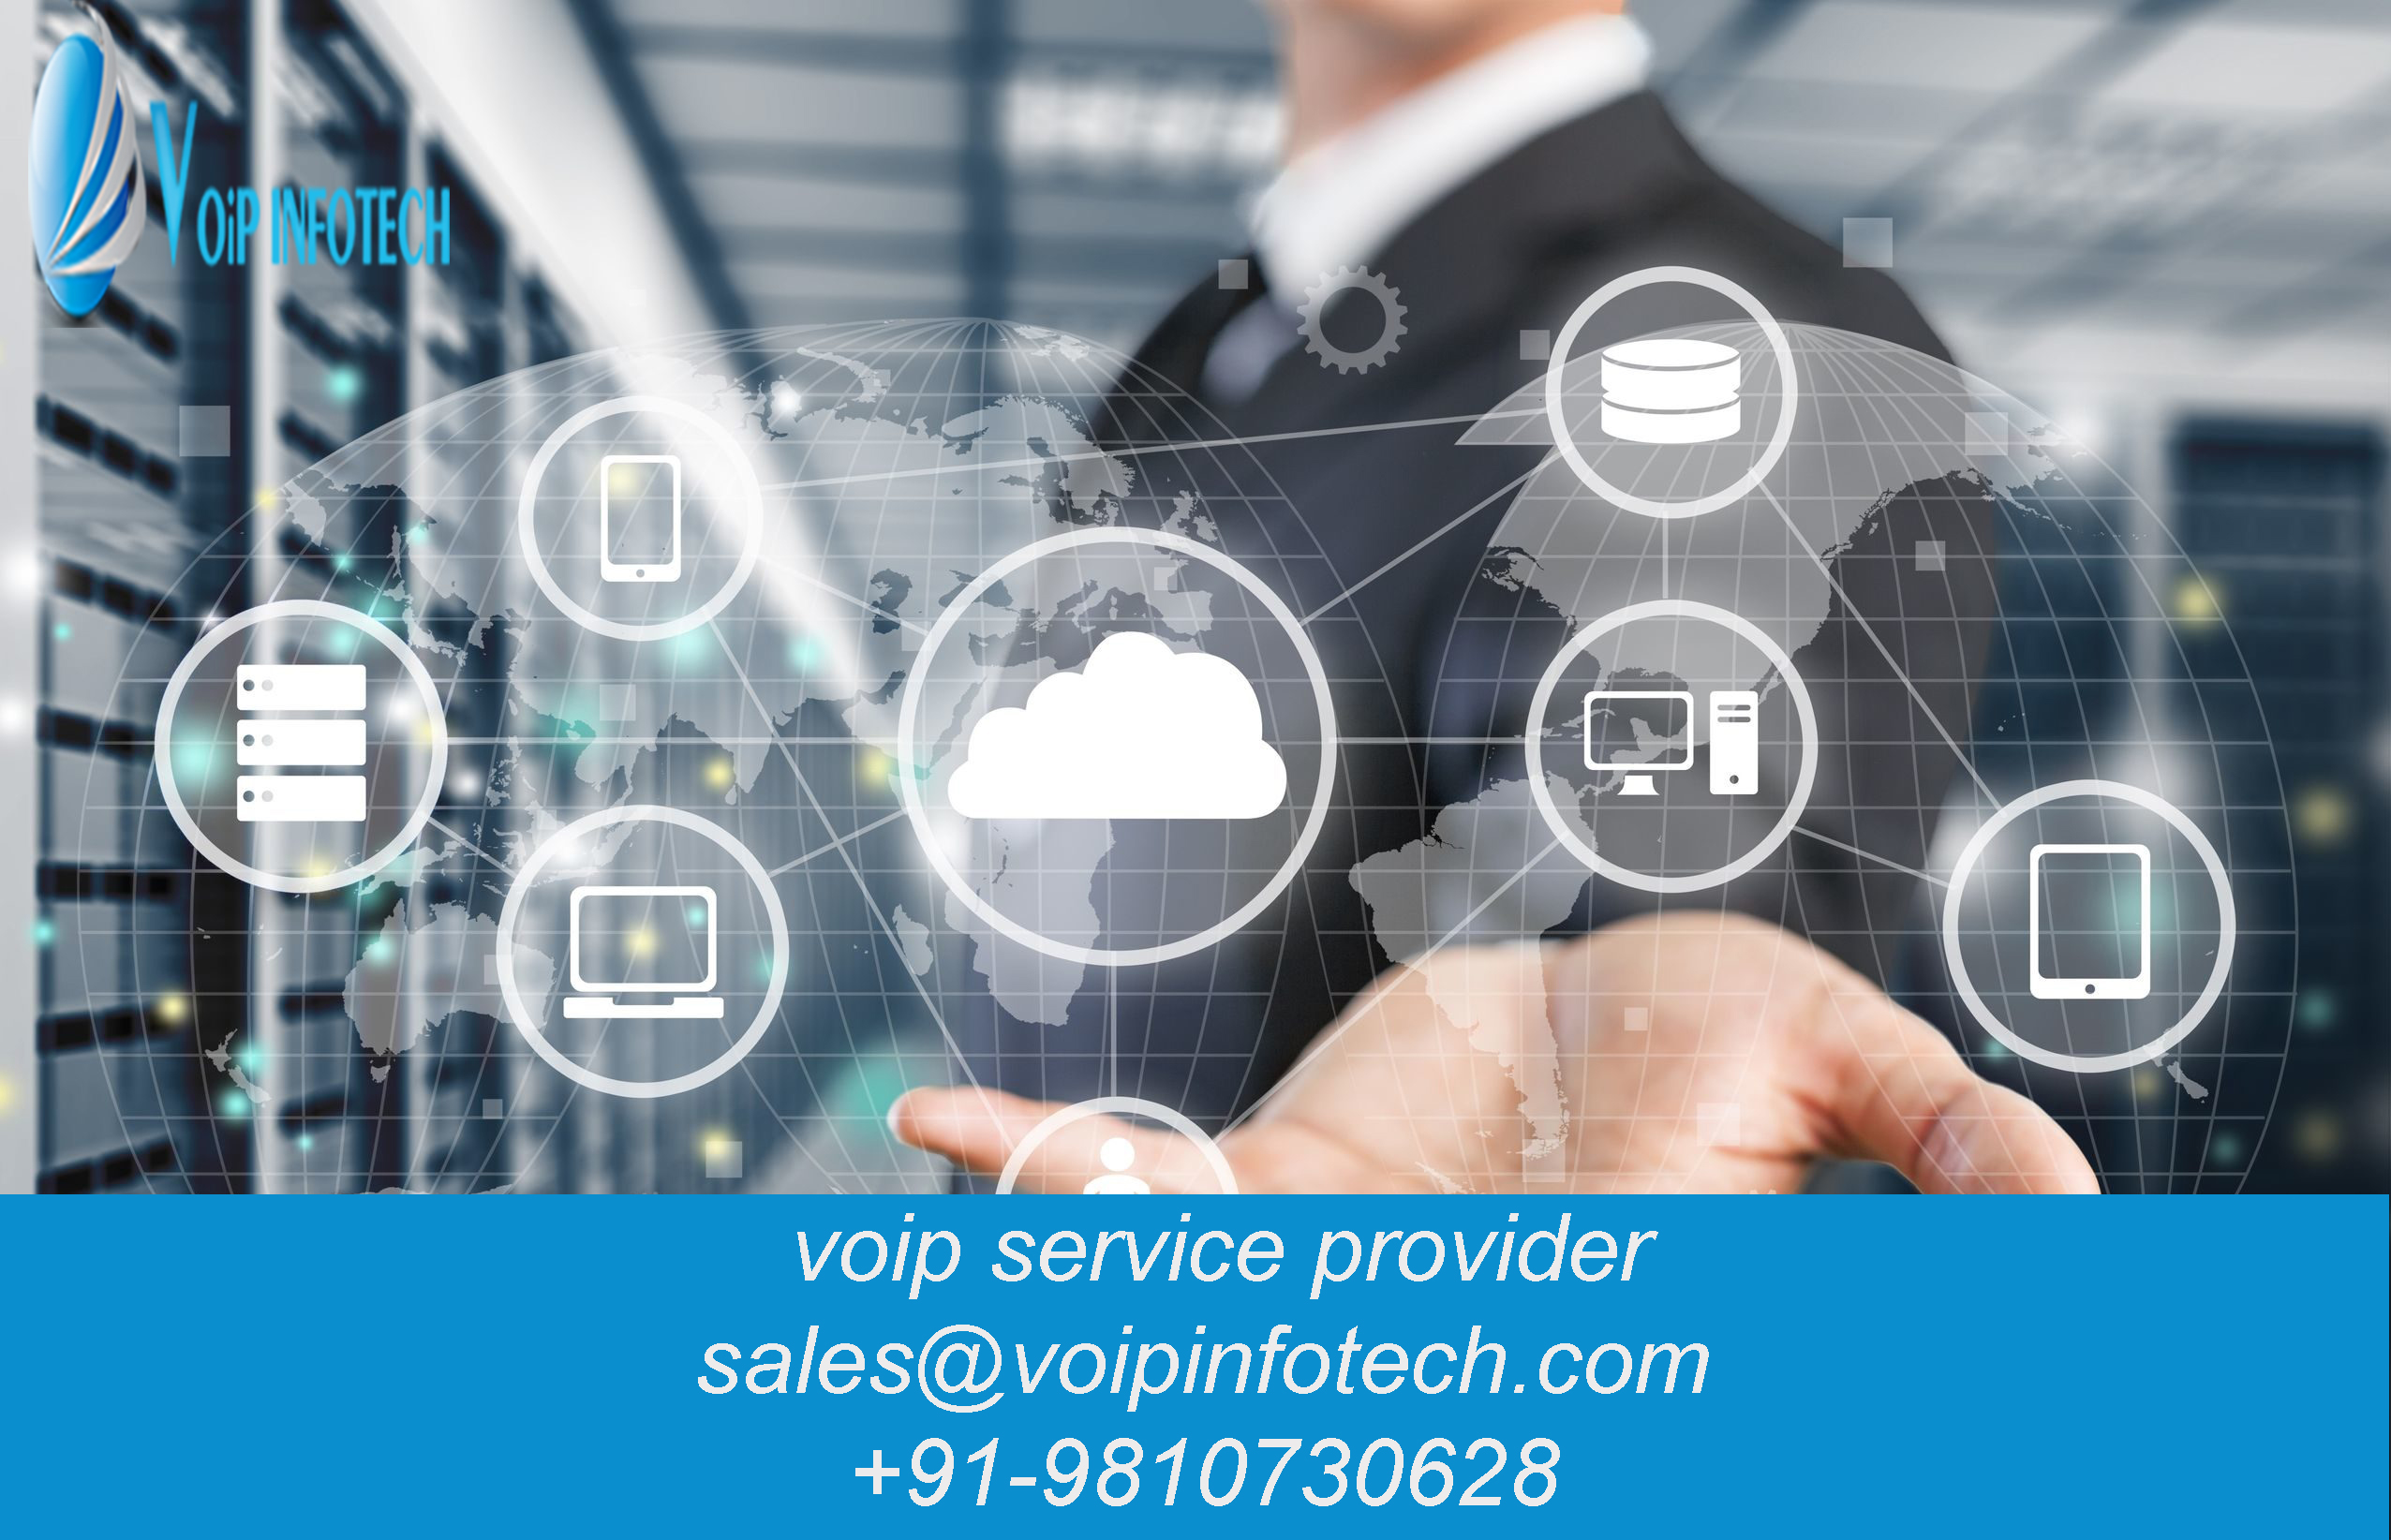 voip service providerrr.jpg